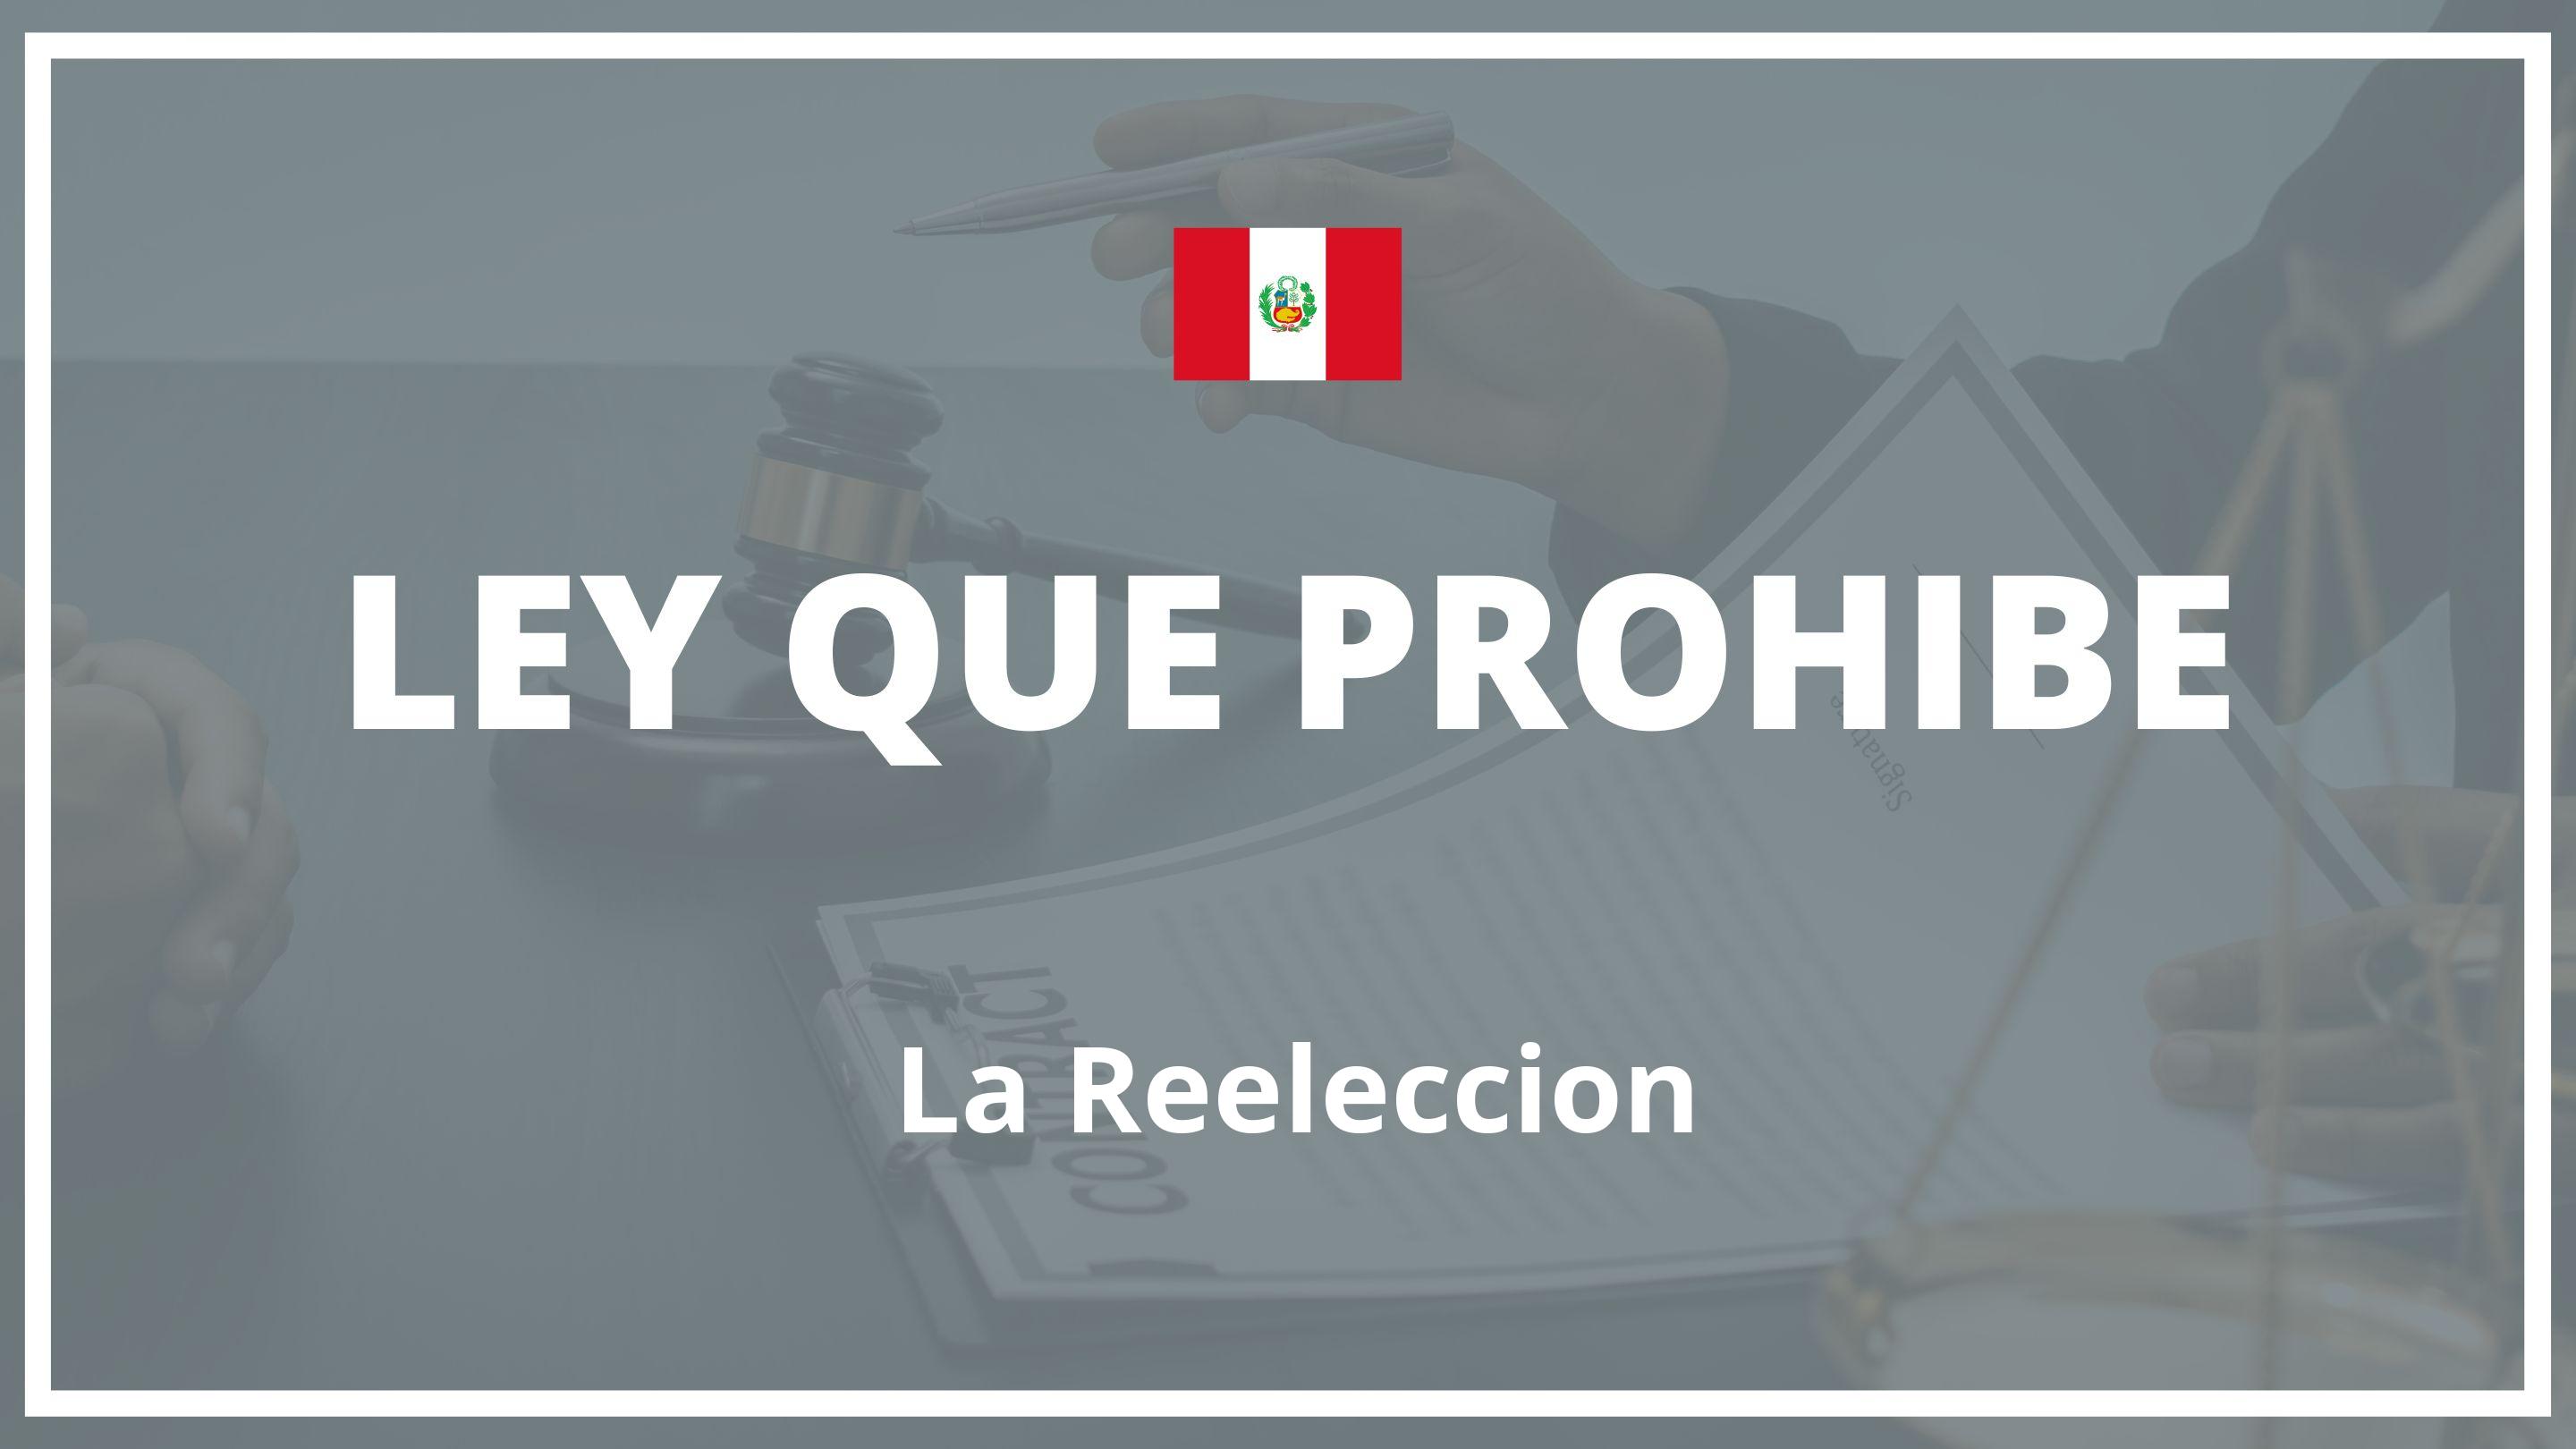 Ley que prohibe la reeleccion Peru